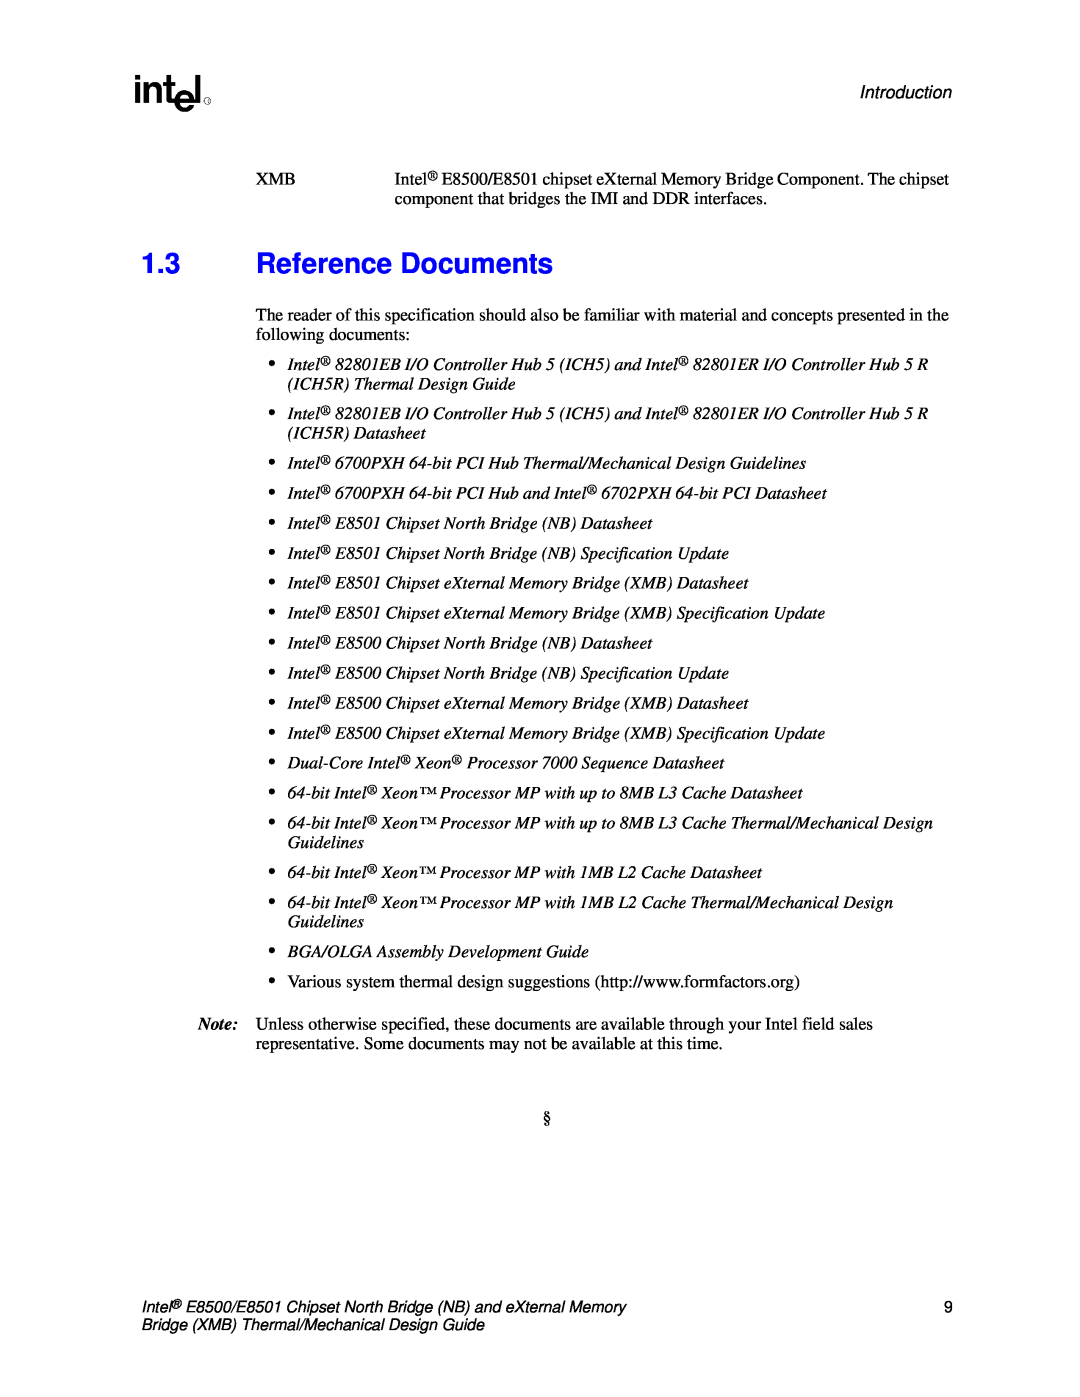 Intel 1.3Reference Documents, •Intel E8501 Chipset North Bridge NB Datasheet, •BGA/OLGA Assembly Development Guide 